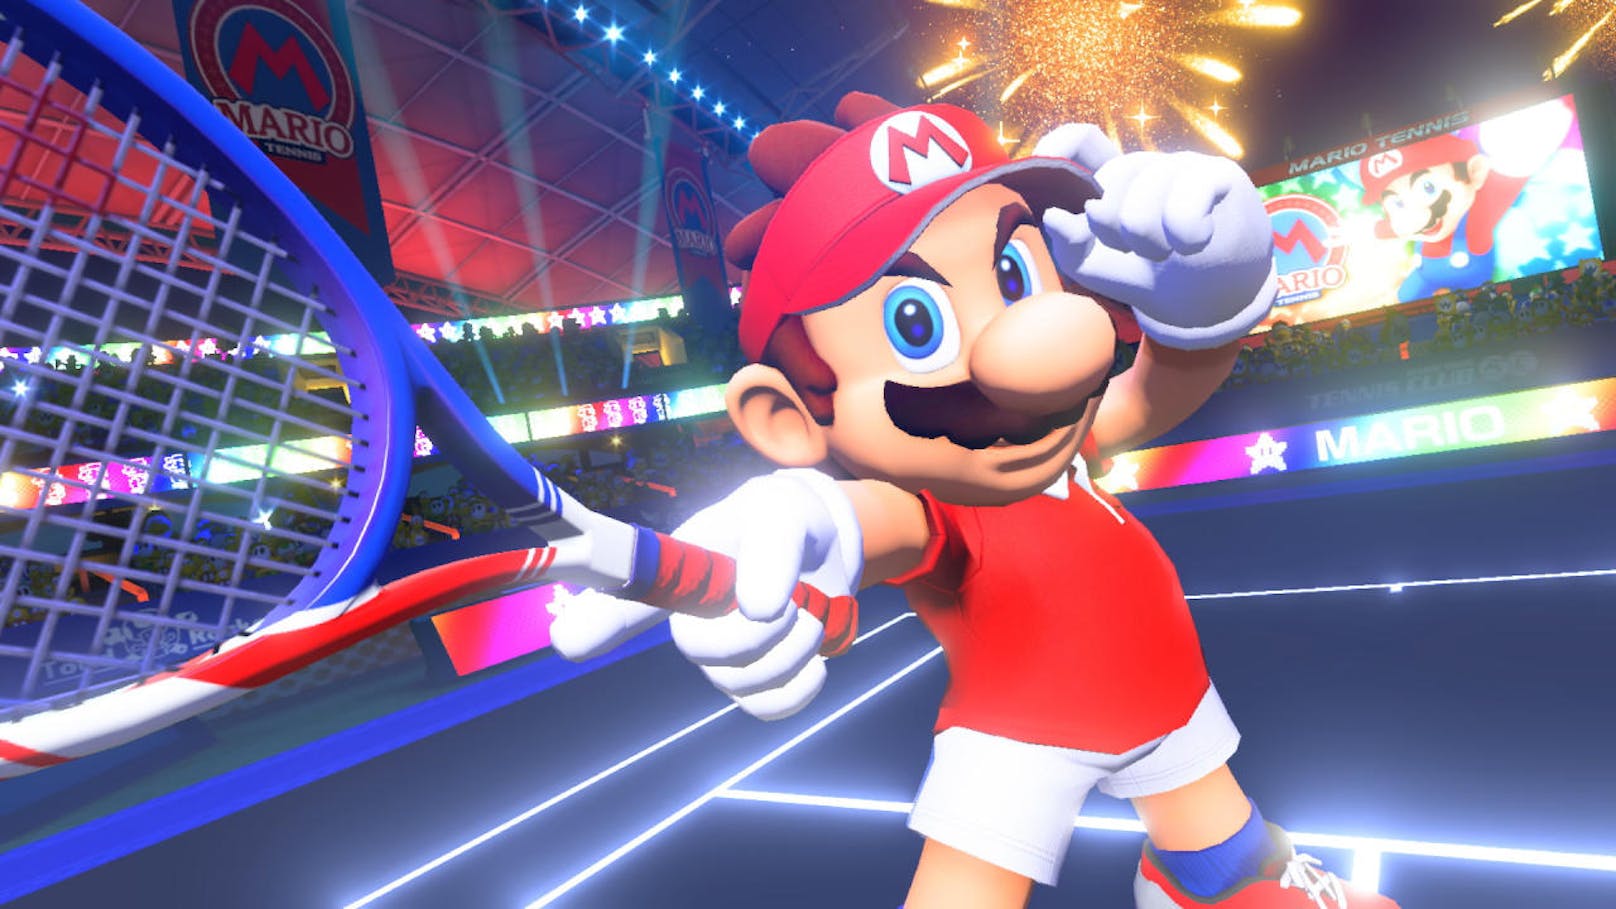  <a href="https://www.heute.at/digital/games/story/Mario-Tennis-Aces-Test-Review-Nintendo-Switch-So-abgedreht-war-der-Tennis-Sport-noch-nie-59416048" target="_blank">Mario Tennis: Aces</a>